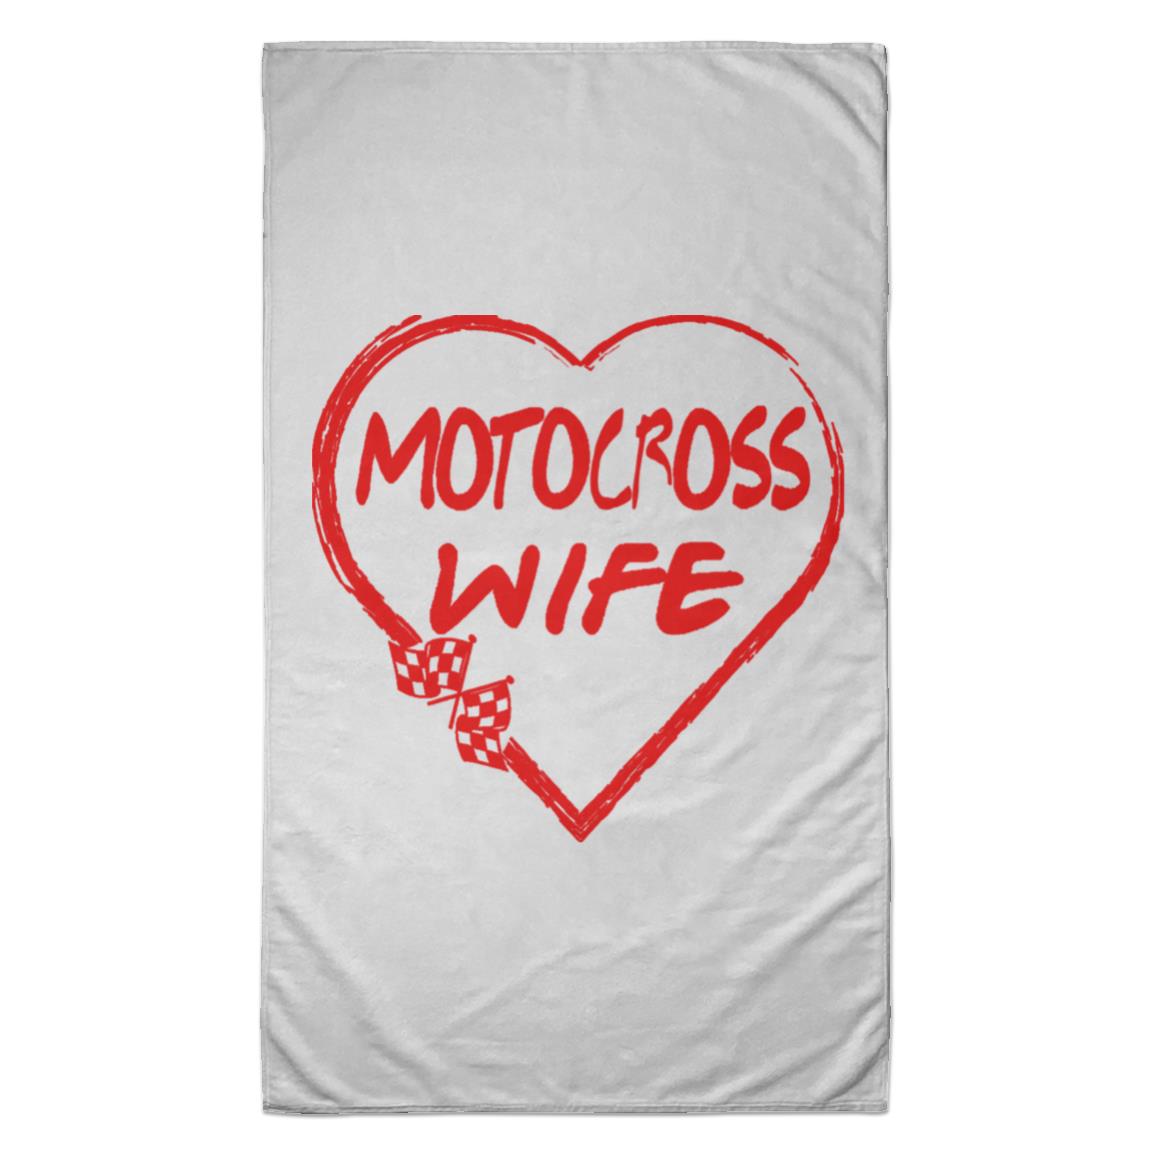 Motocross Wife Towel - 35x60